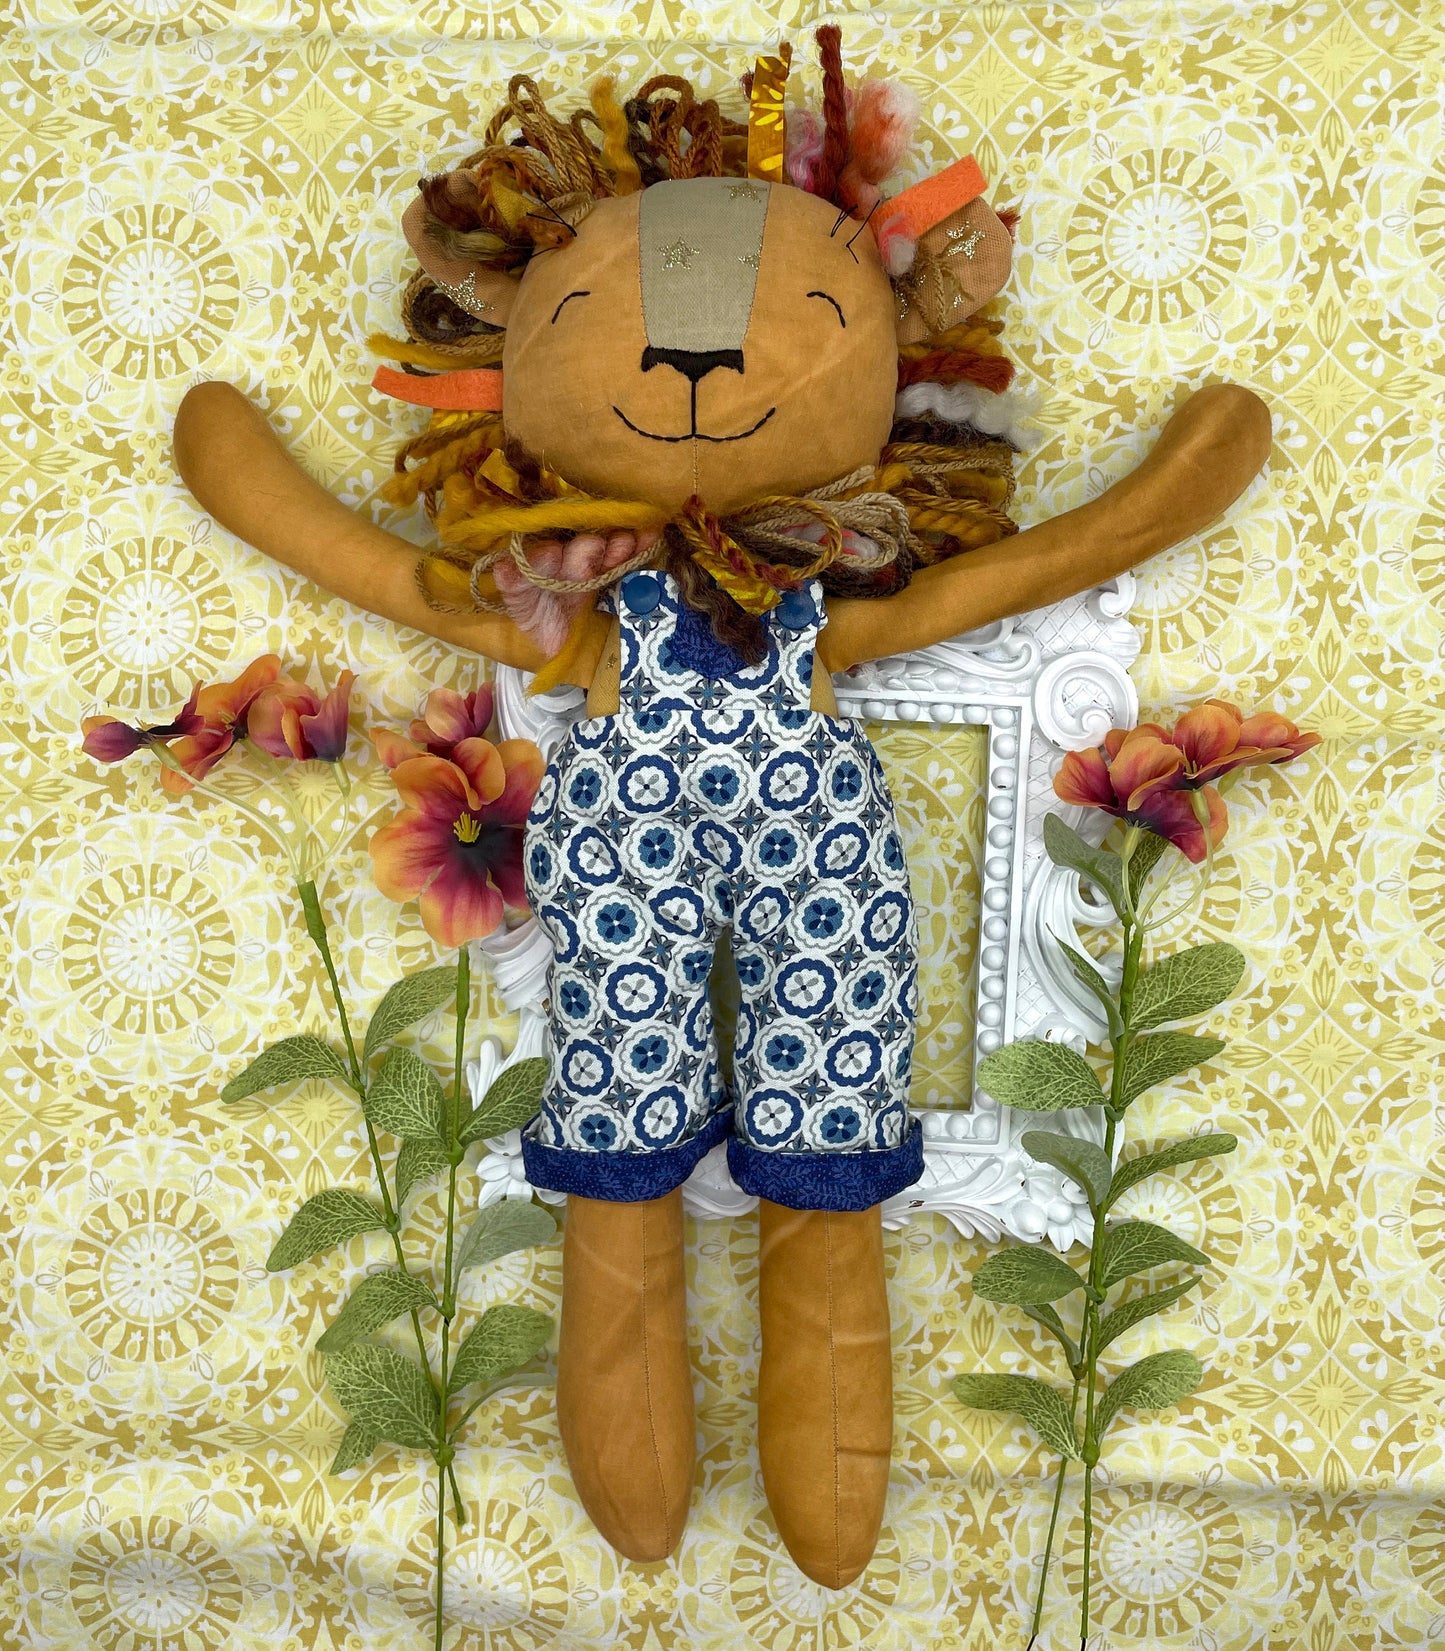 Handmade Lion Doll, "BARBEAU", rag doll, reversible, lion stuffed animal, stuffed lion, heirloom gift, lion toy, boy doll